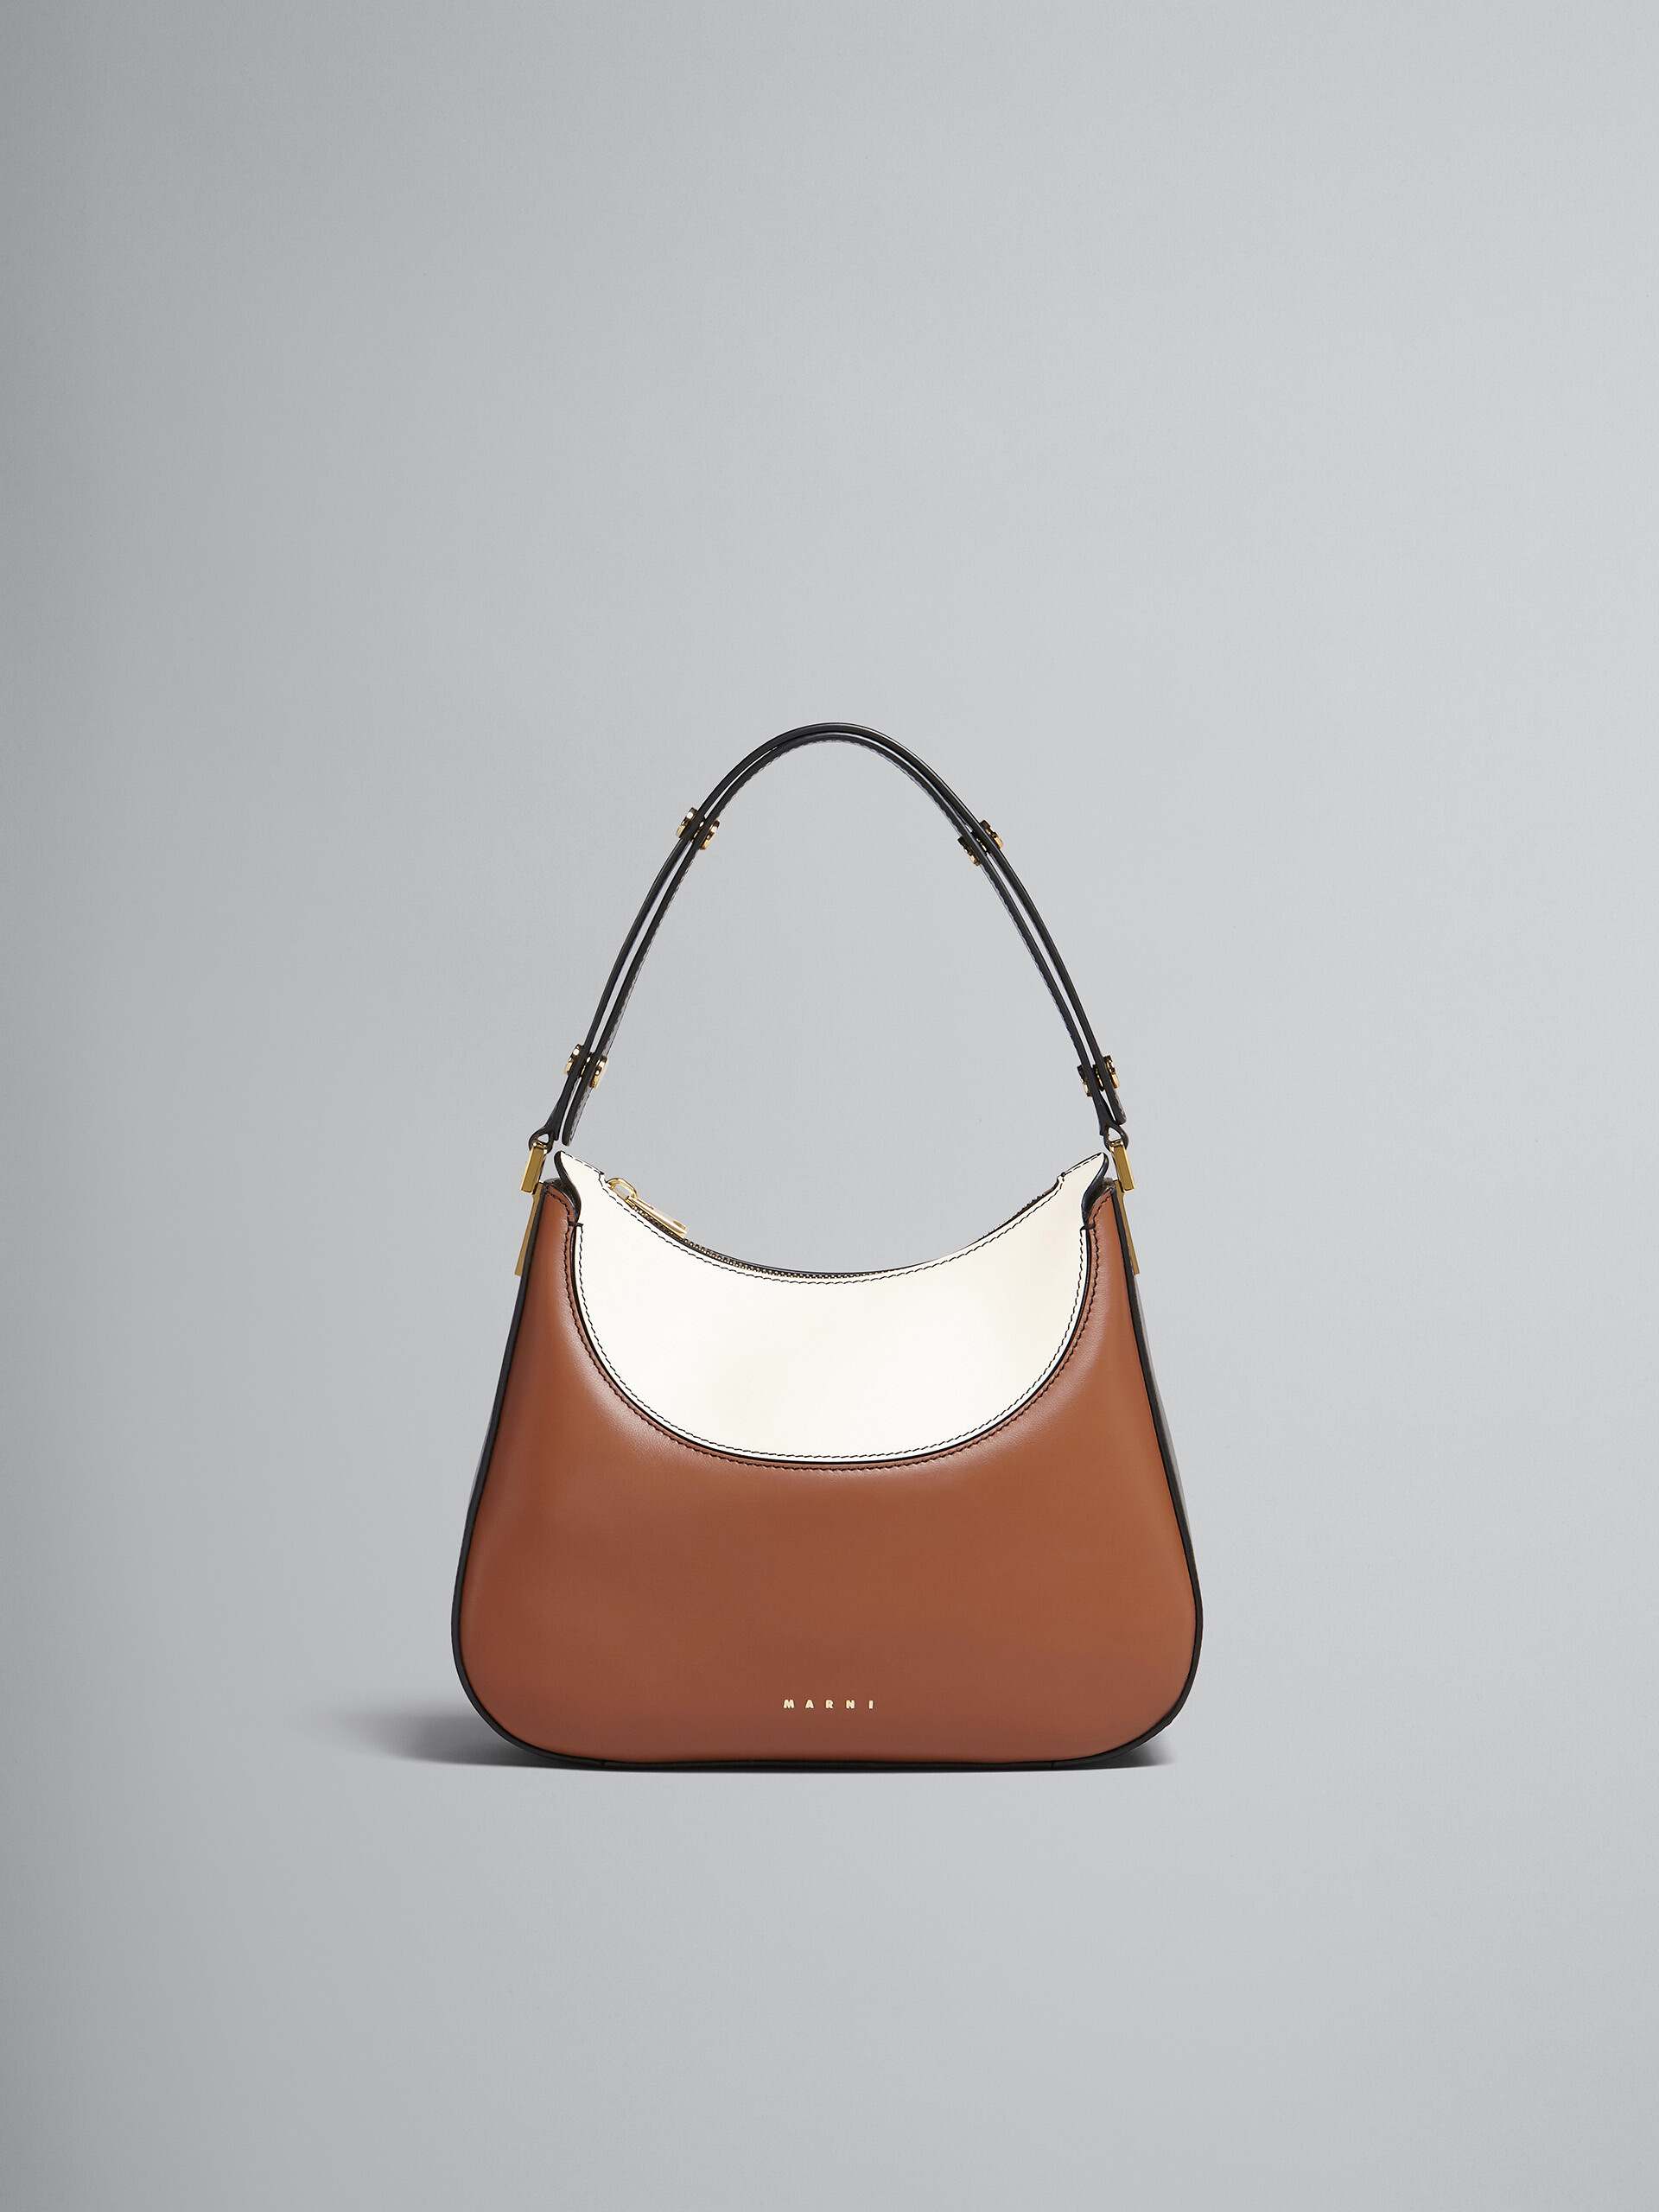 Milano small bag in brown black and white - Handbag - Image 1